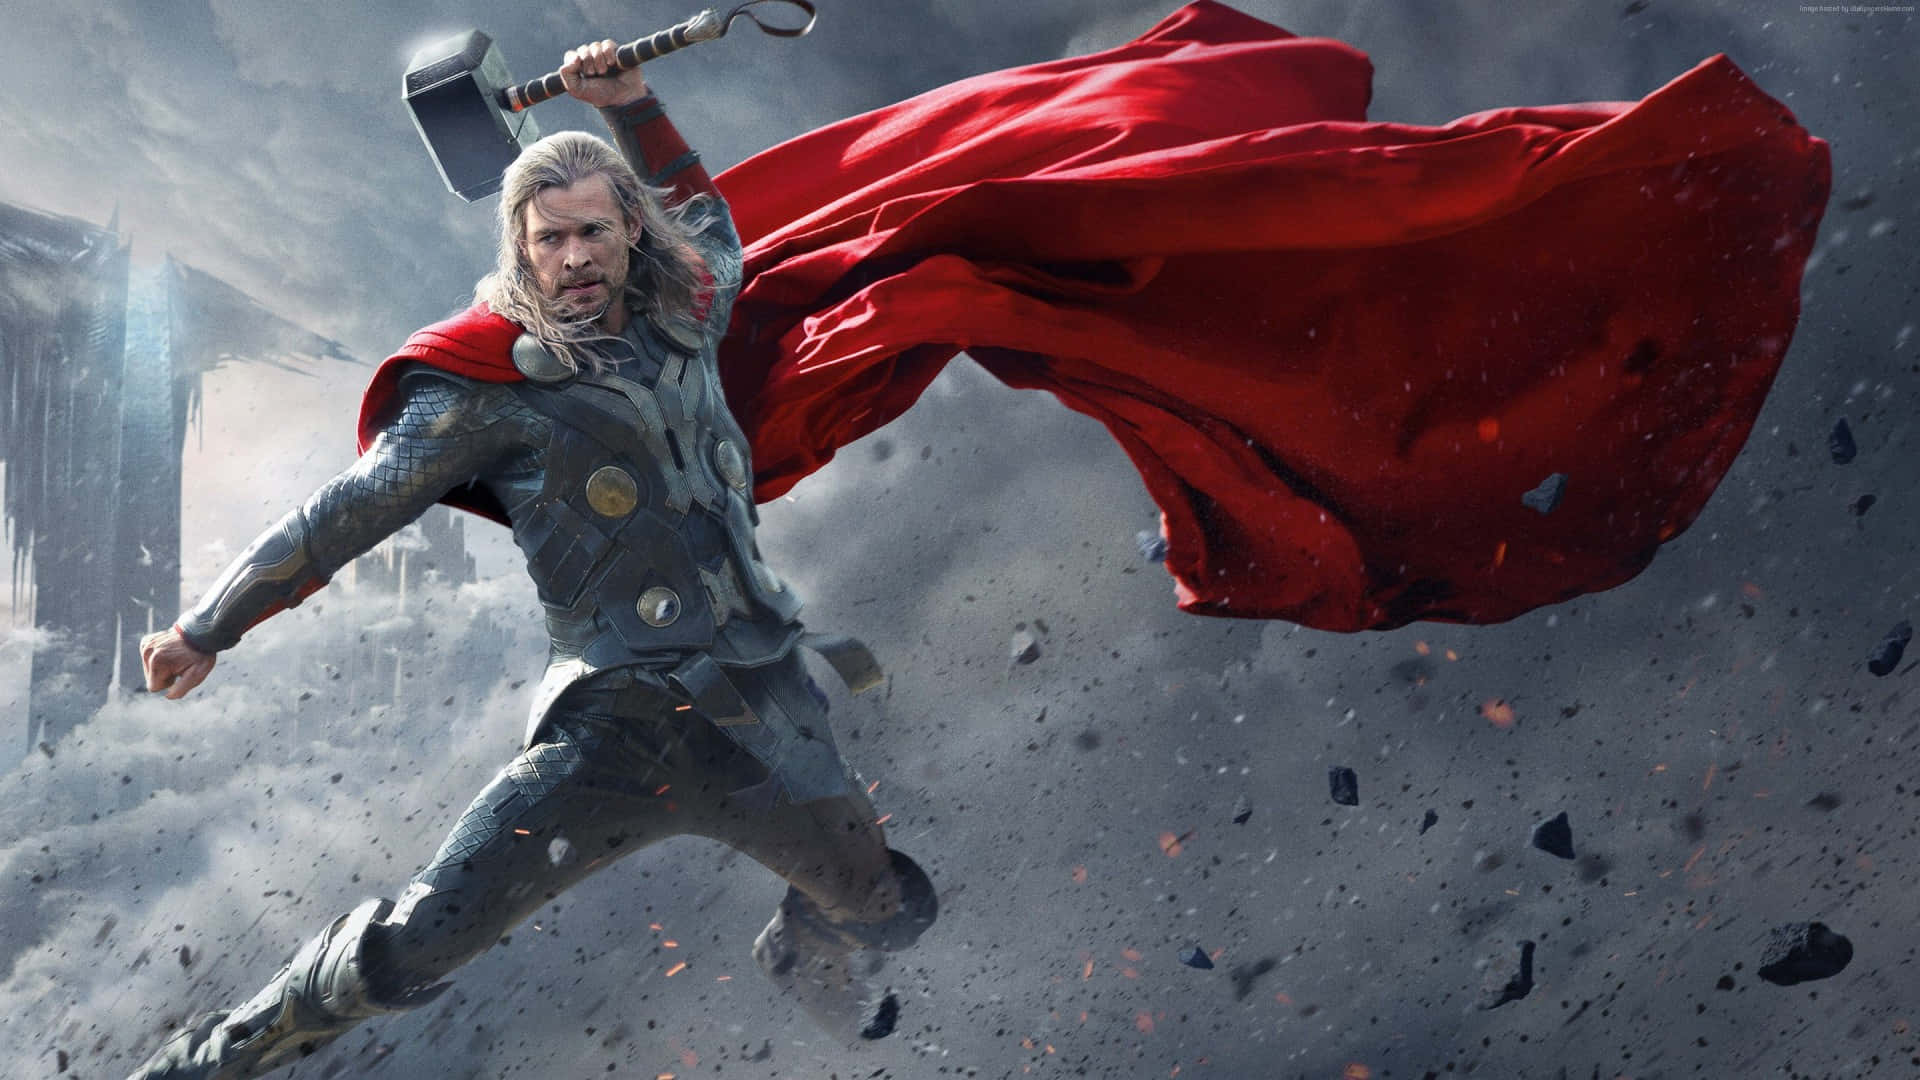 Thor in an epic fight scene from Thor Ragnarok Wallpaper